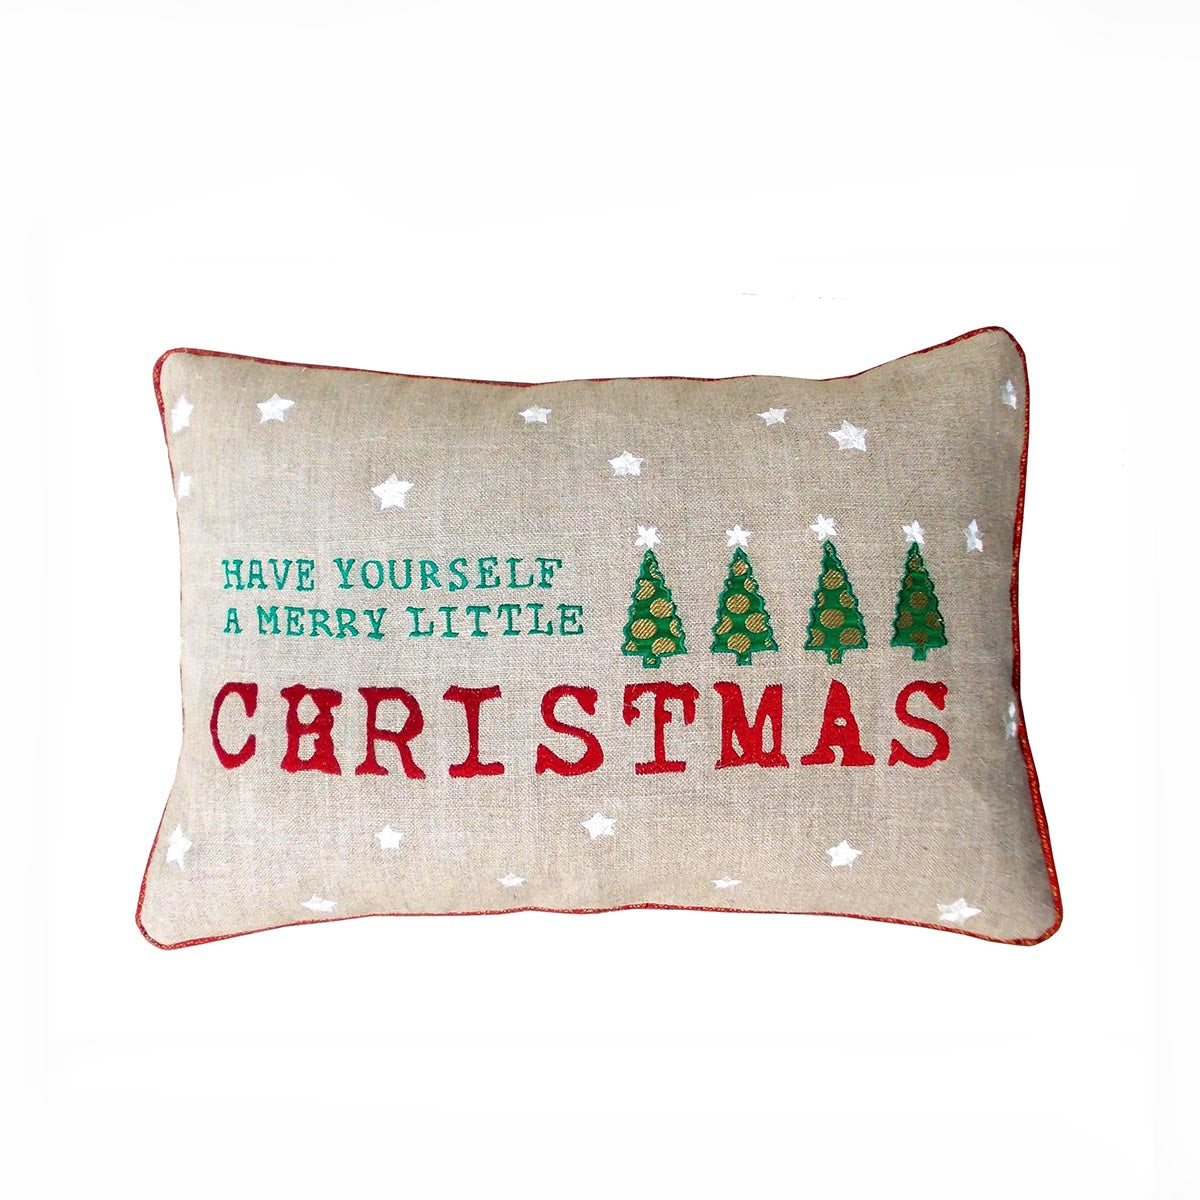 Christmas merry christmas cushion cover, linen pillow cover